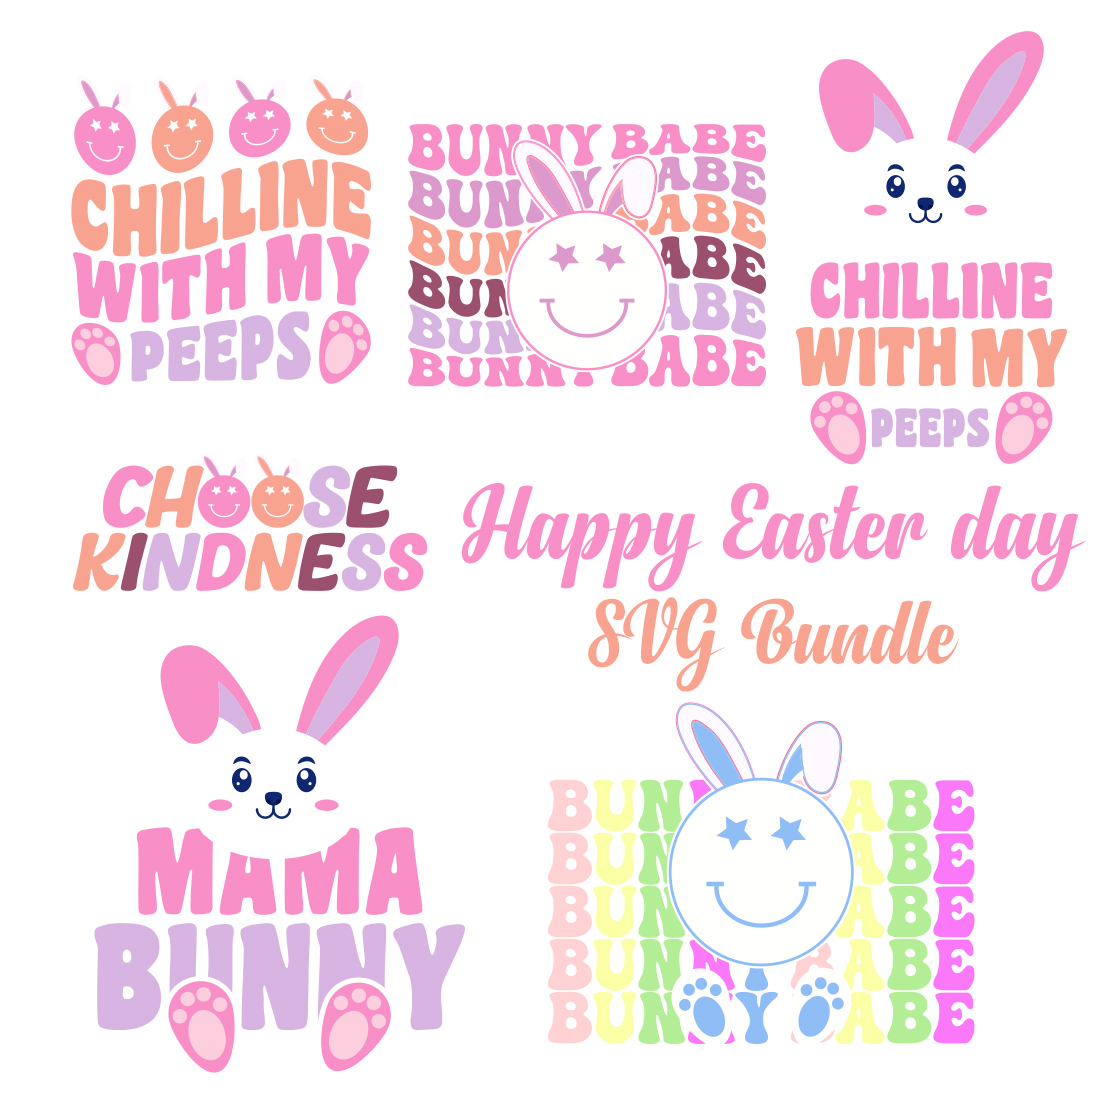 Happy Easter Day SVG Bundle design preview image.